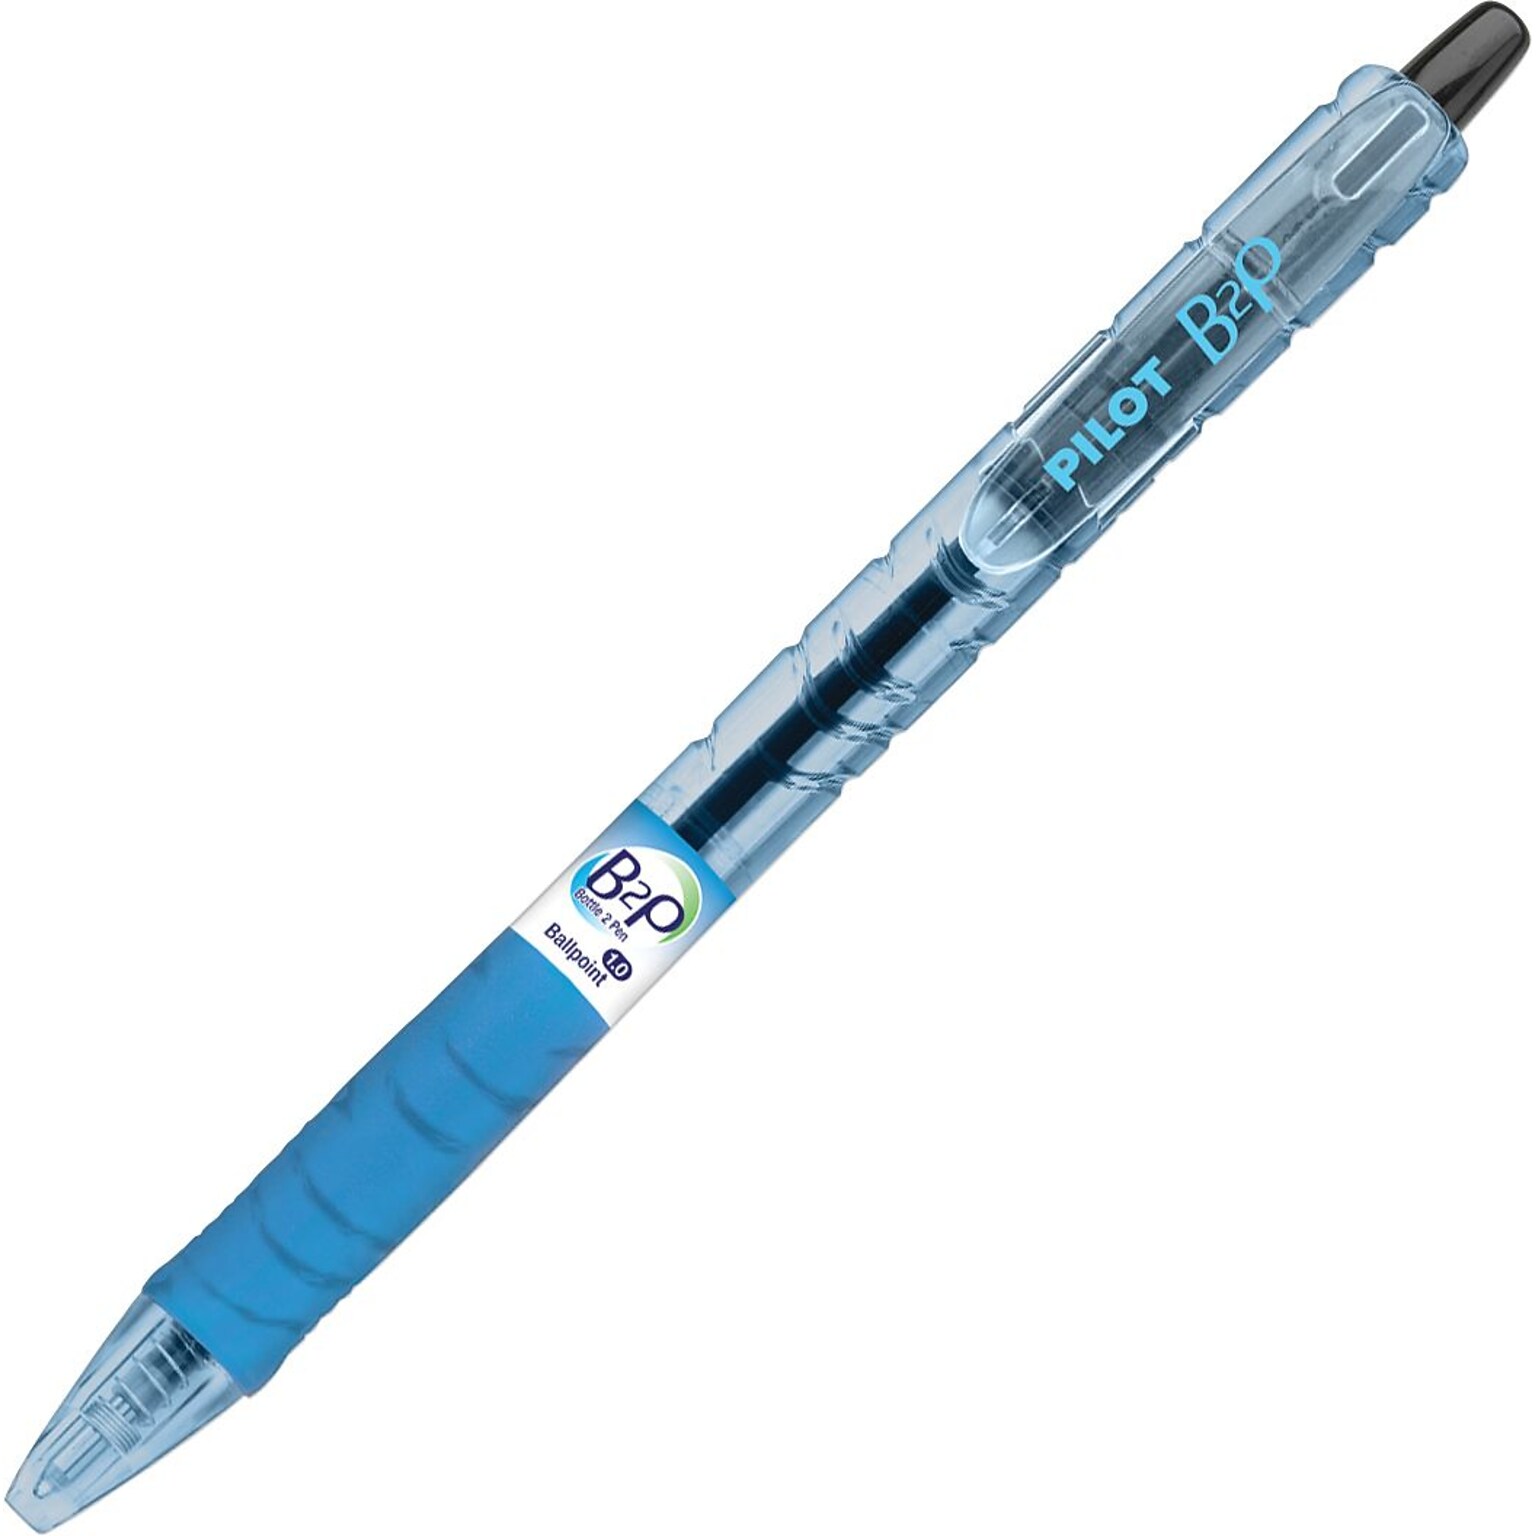 Pilot B2P Bottle 2 Pen Retractable Ball Point Pens, Medium Point, 1.0 mm, Black Ink/Translucent Blue Barrel, 144/CT